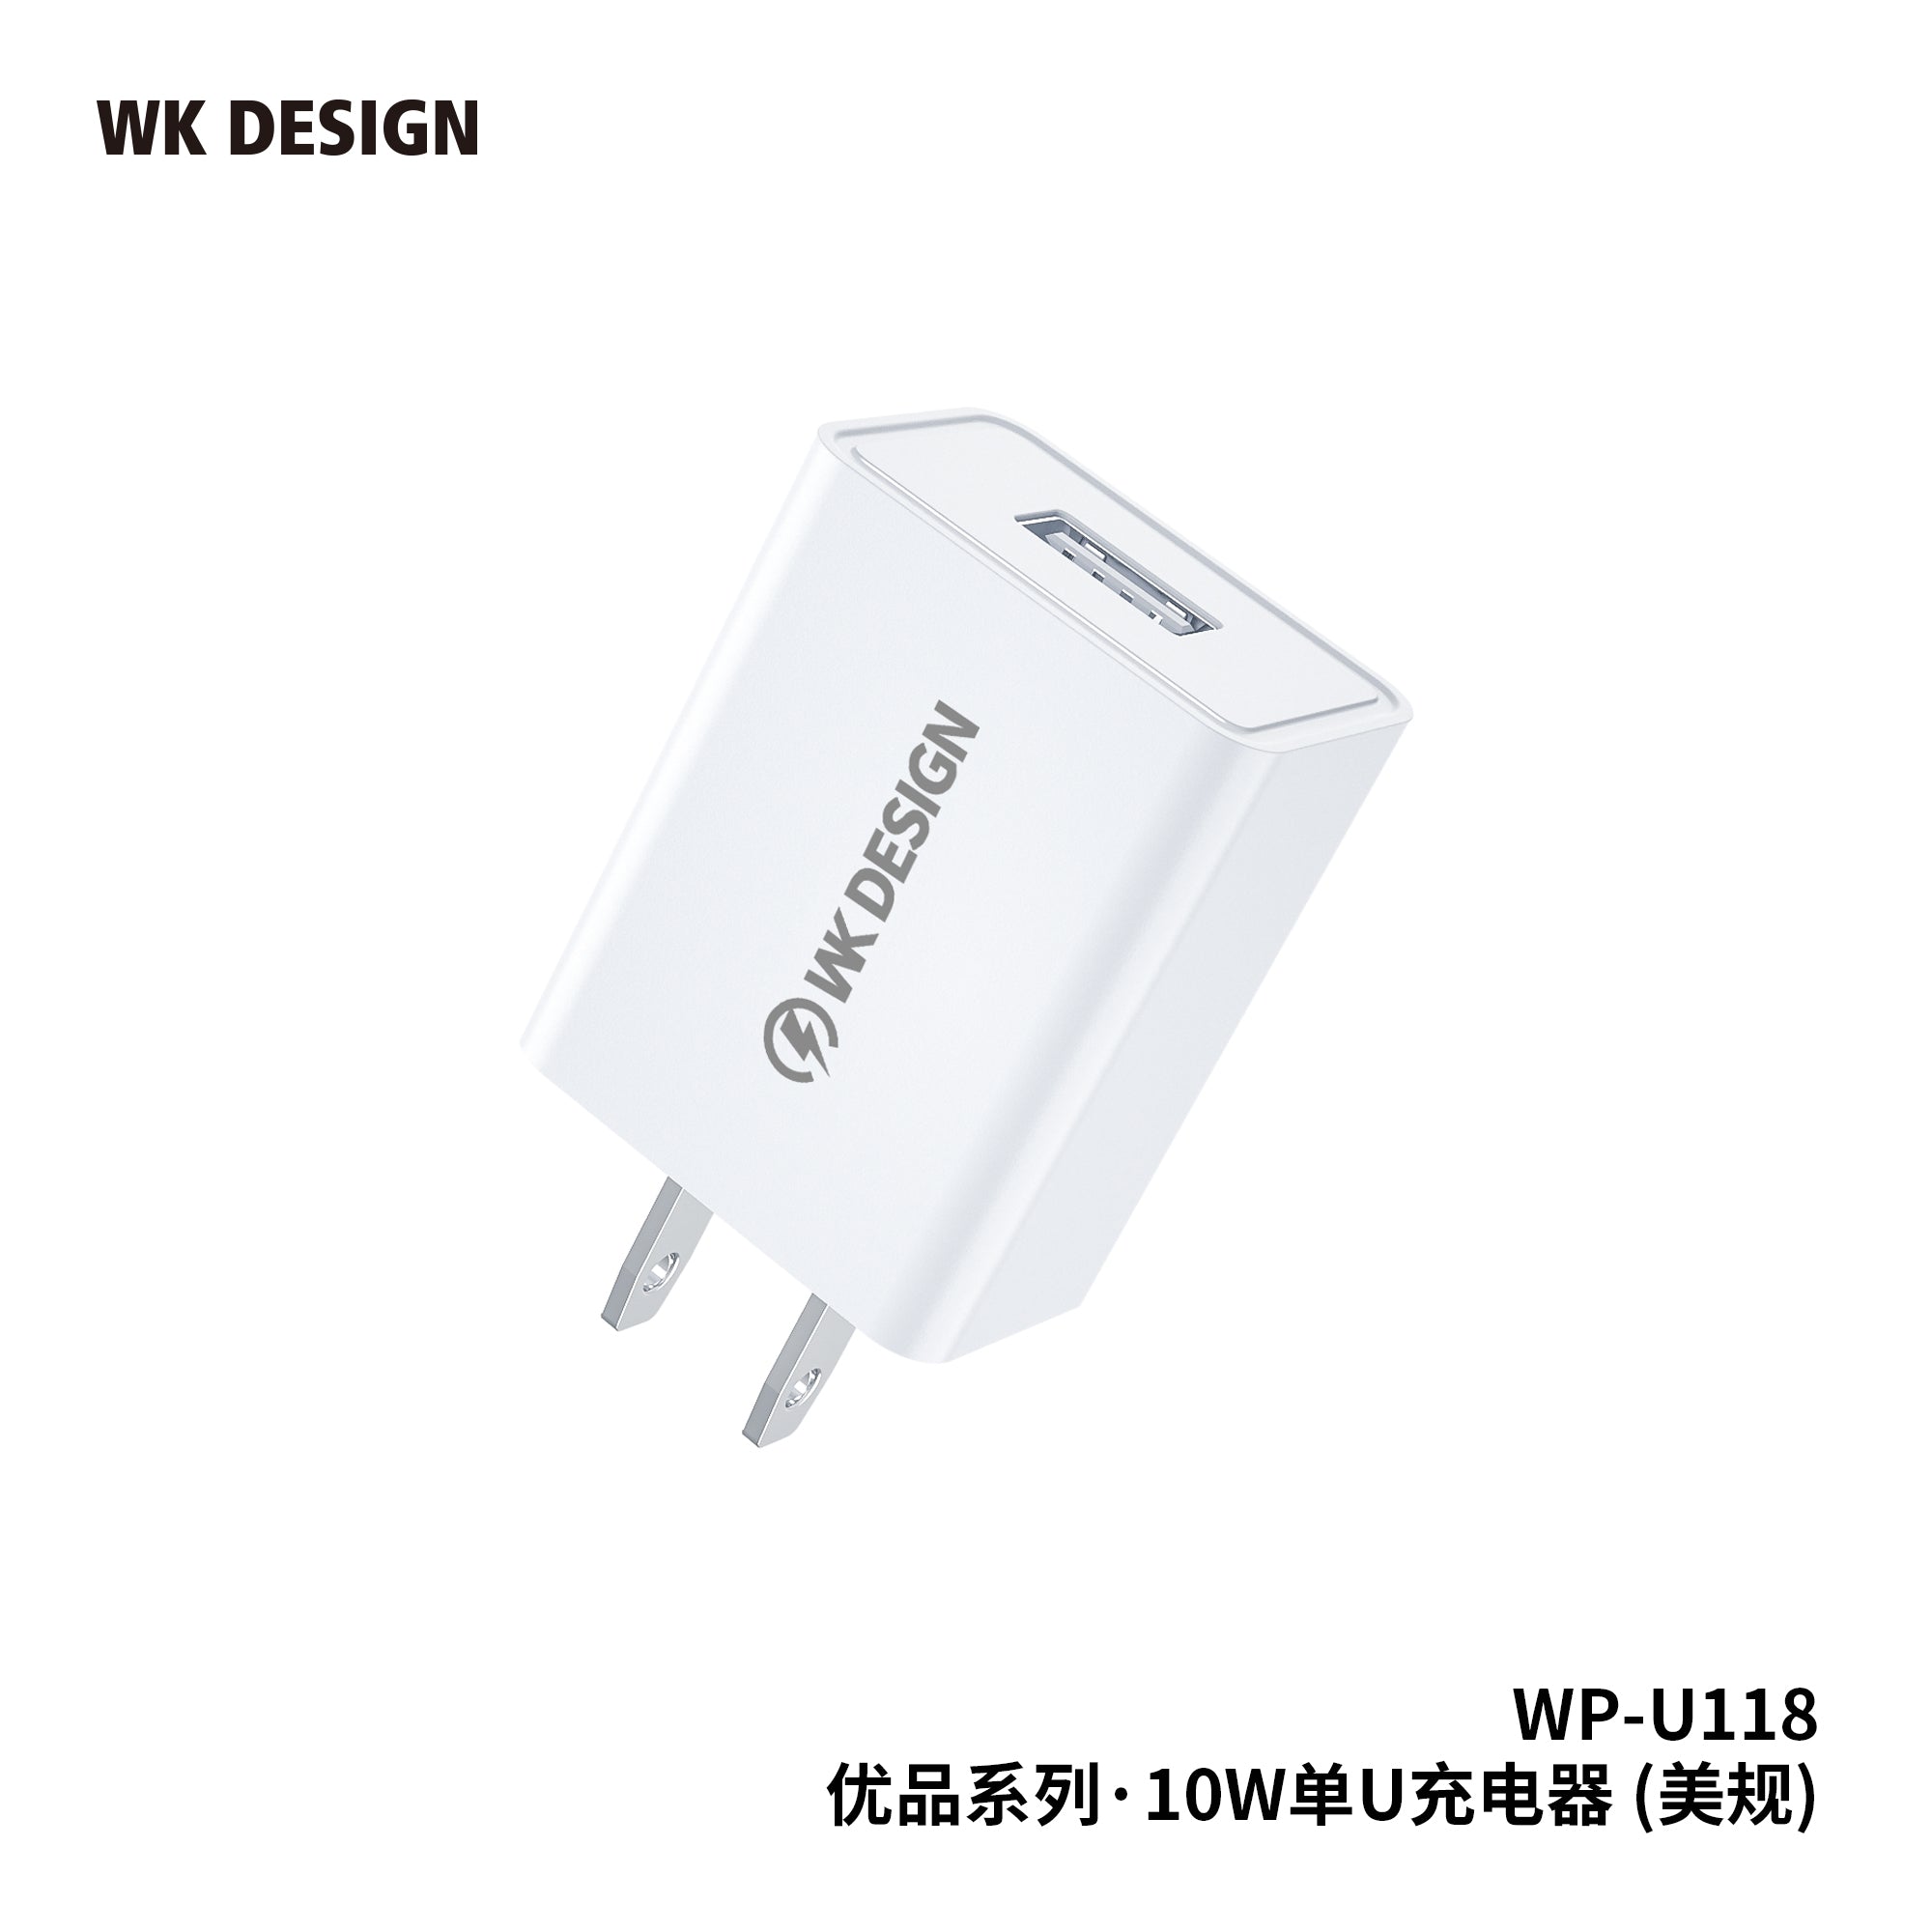 WP-U118 Upine 10W Single USB Charger